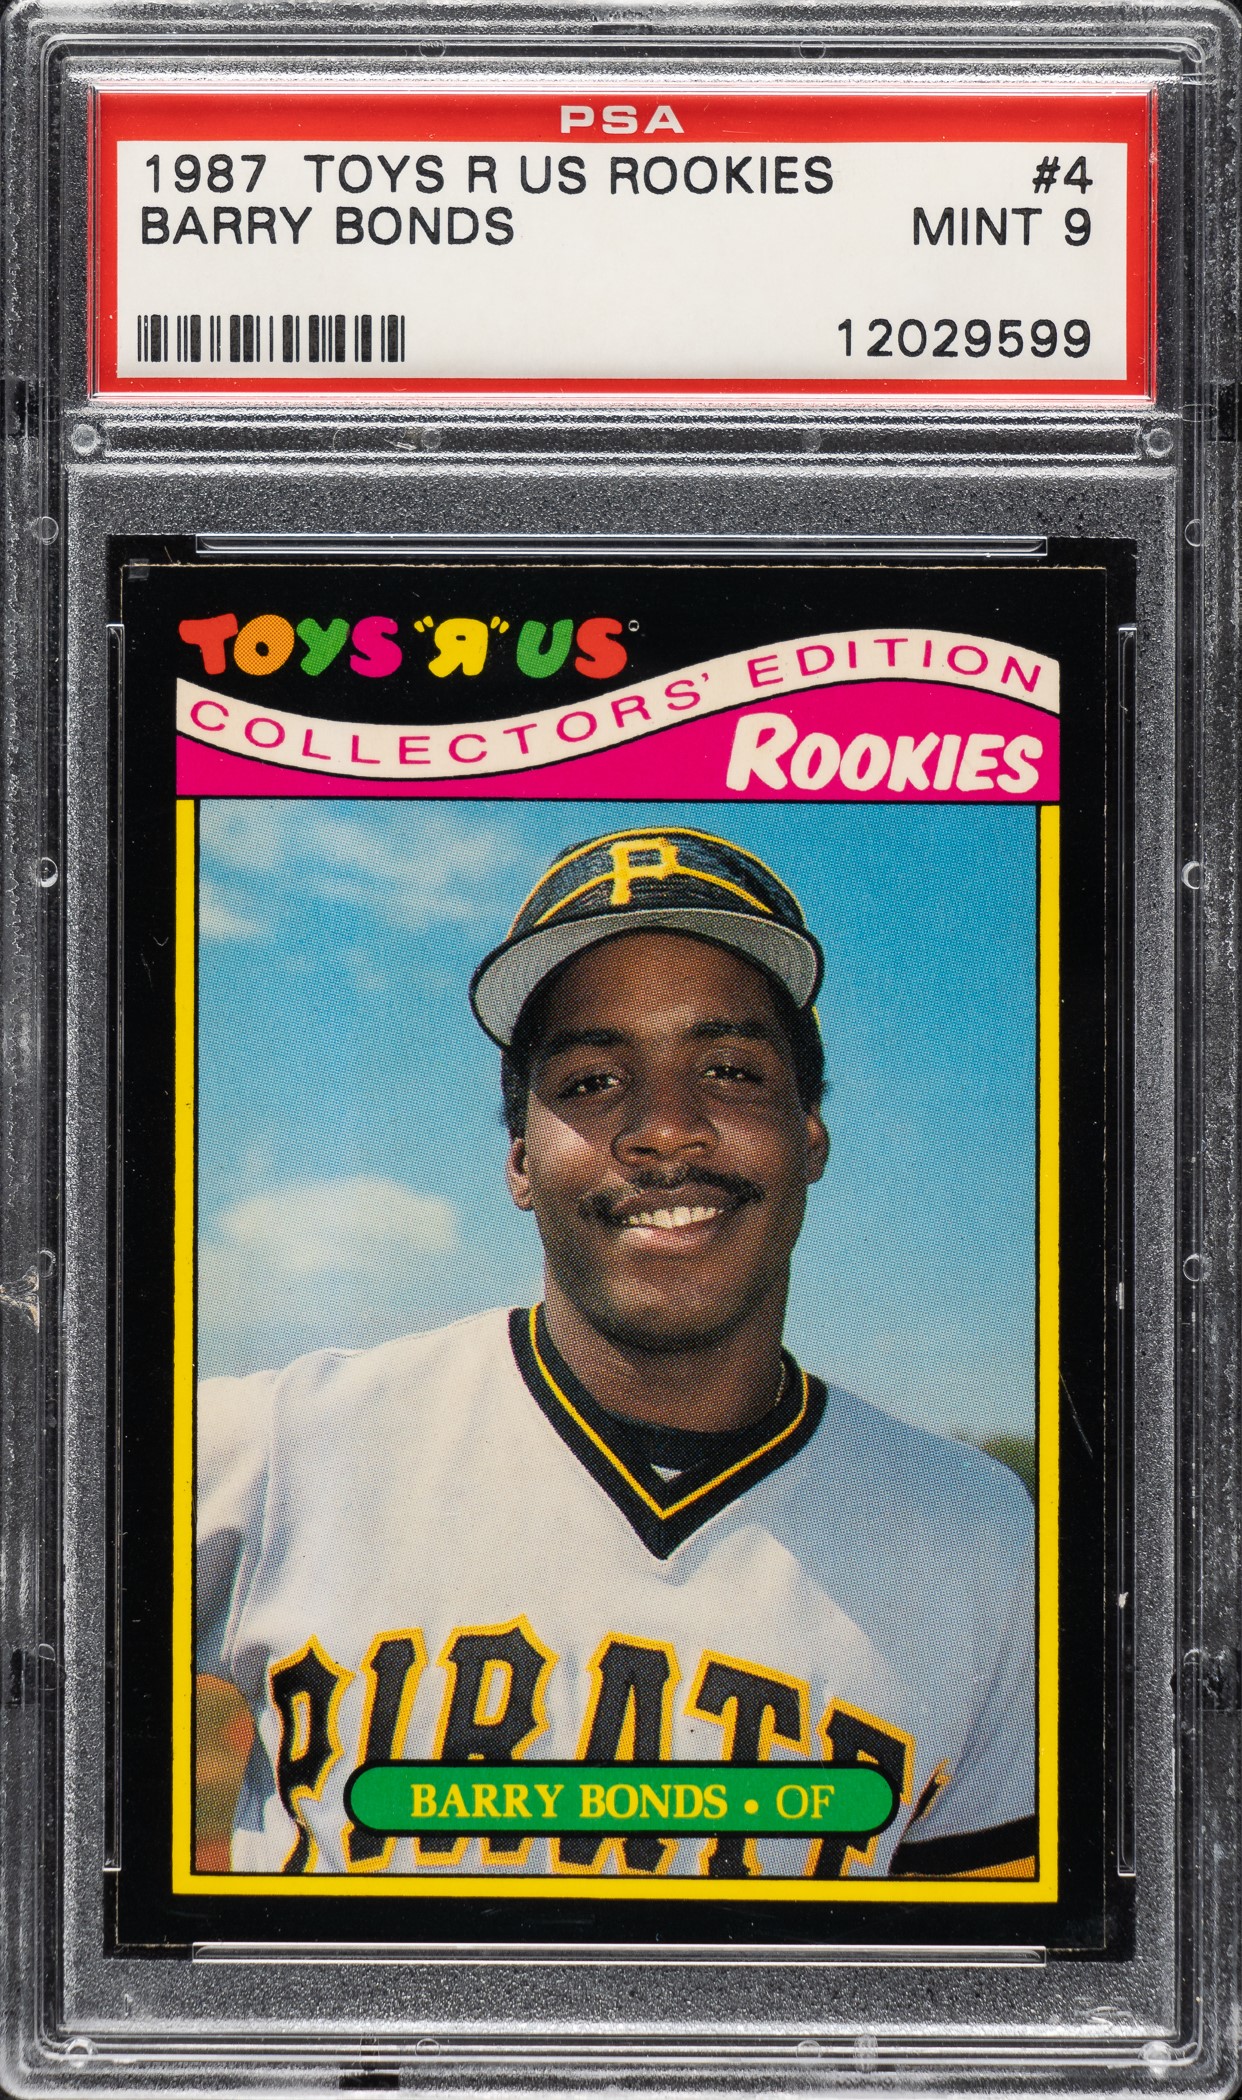 Barry bonds baseball card value